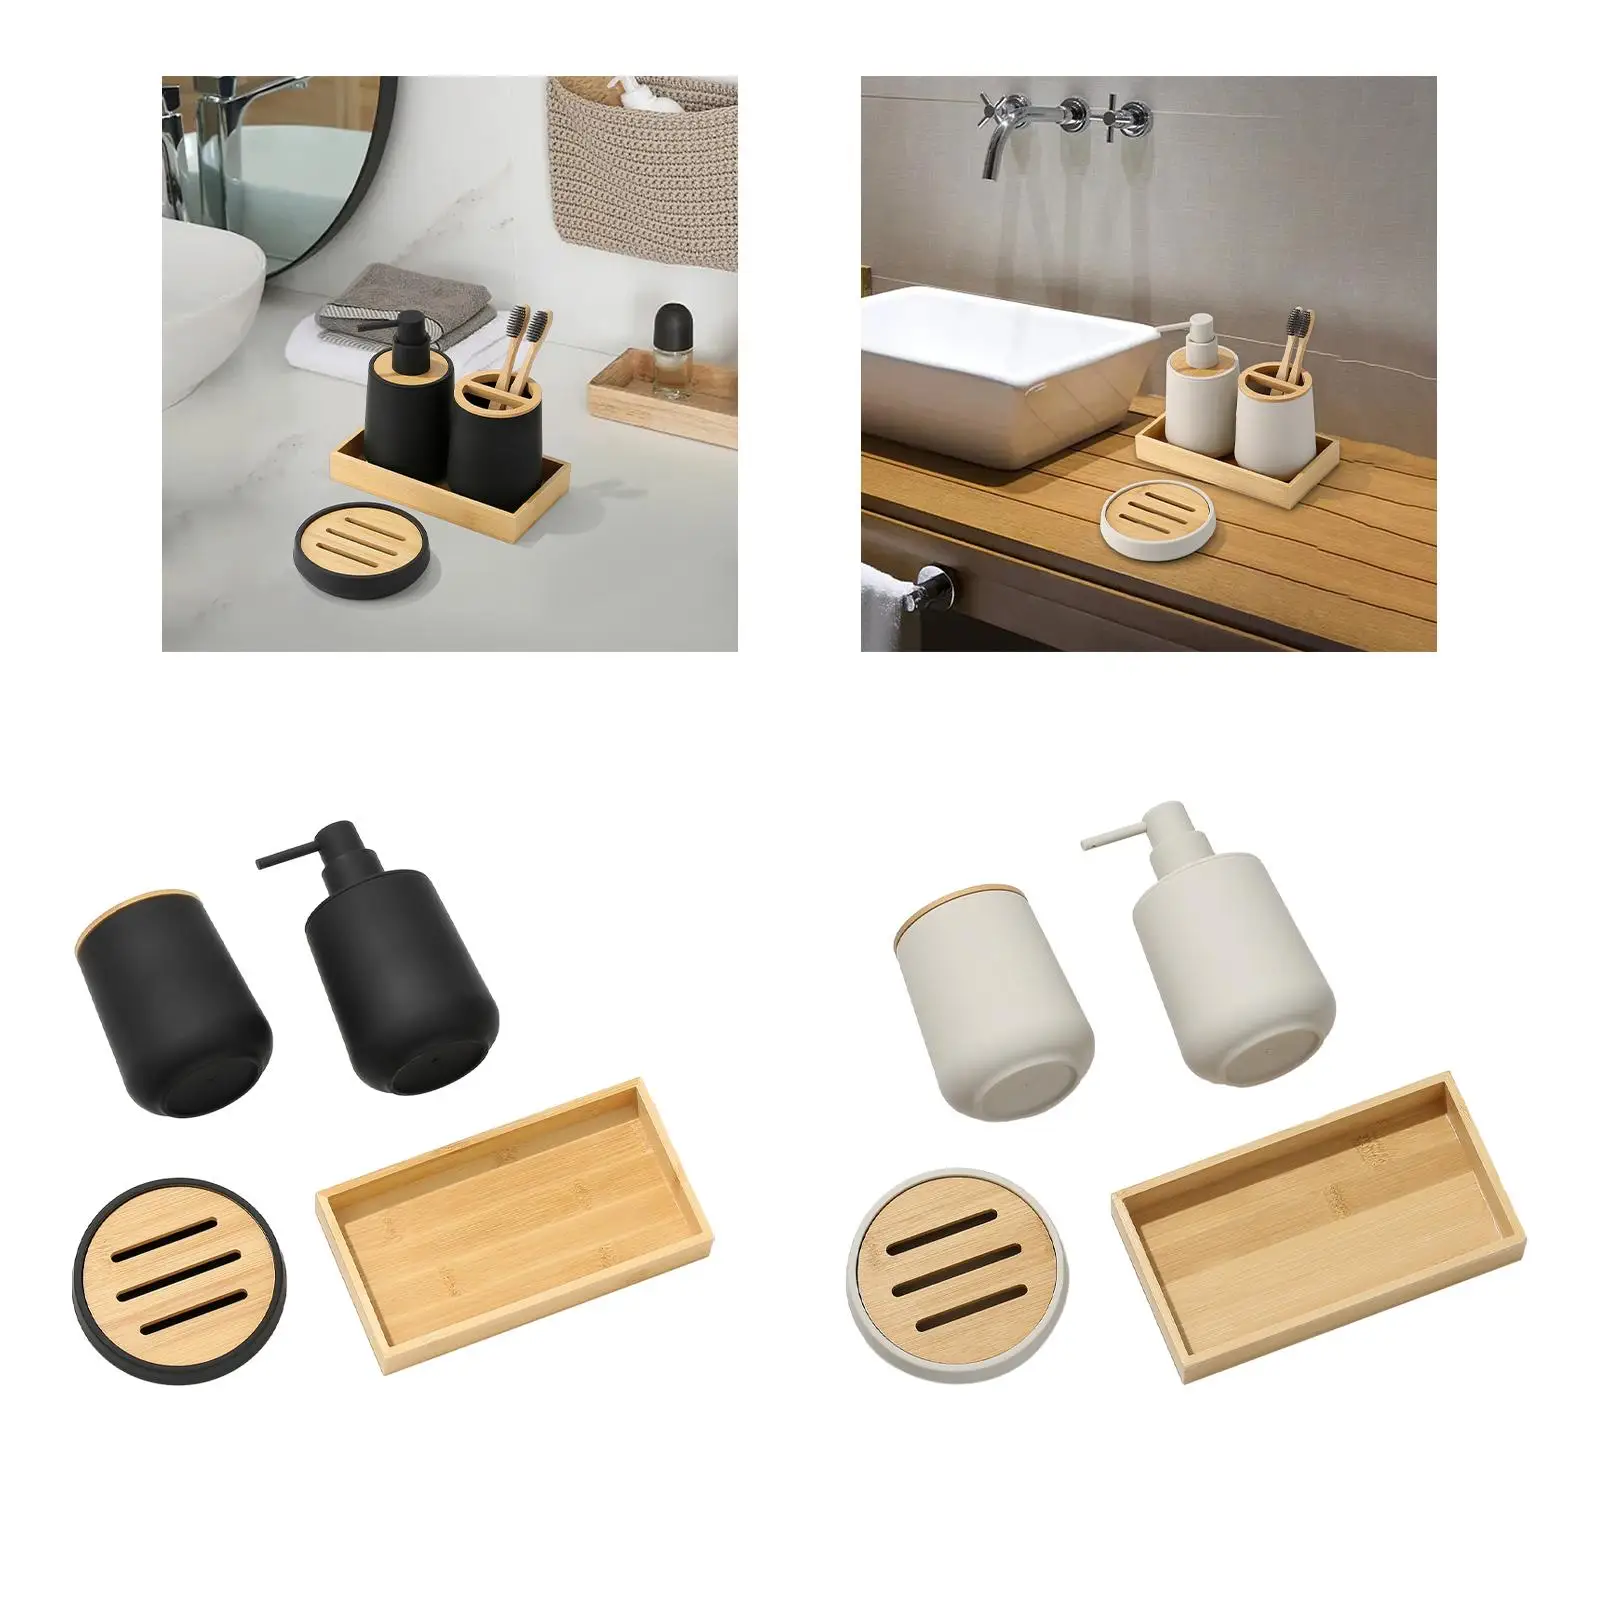 4Pcs Bathroom Accessories Set Vanity Decor for Homes, Office Stylish Design